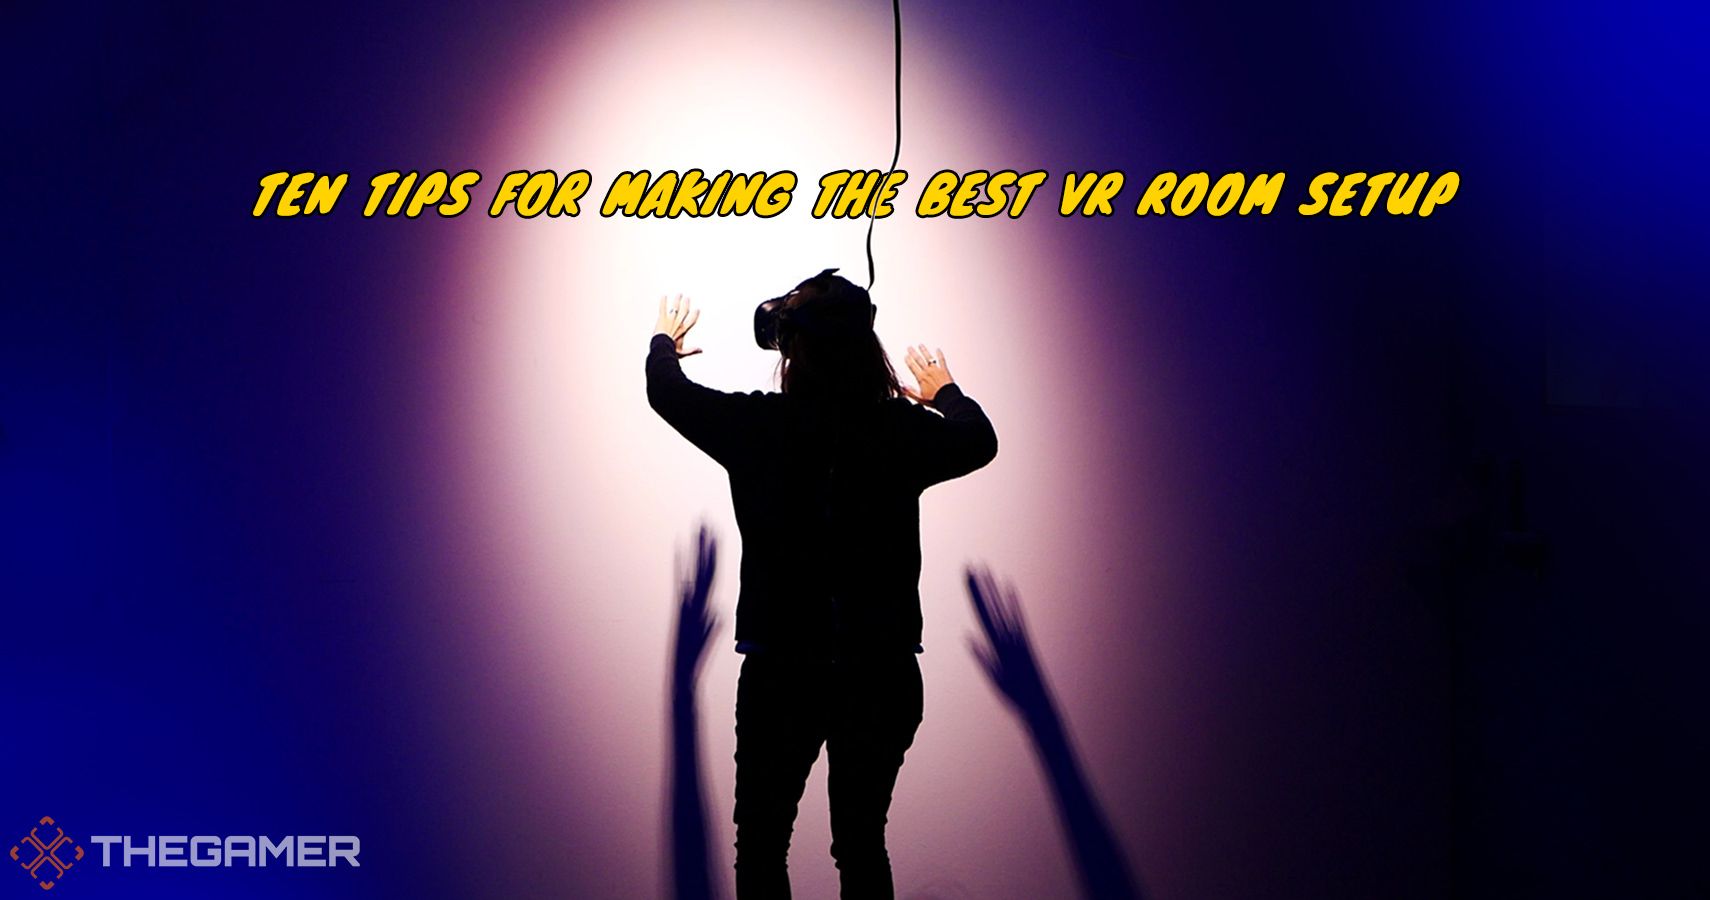 10 Tips For Making The Best VR Room Setup